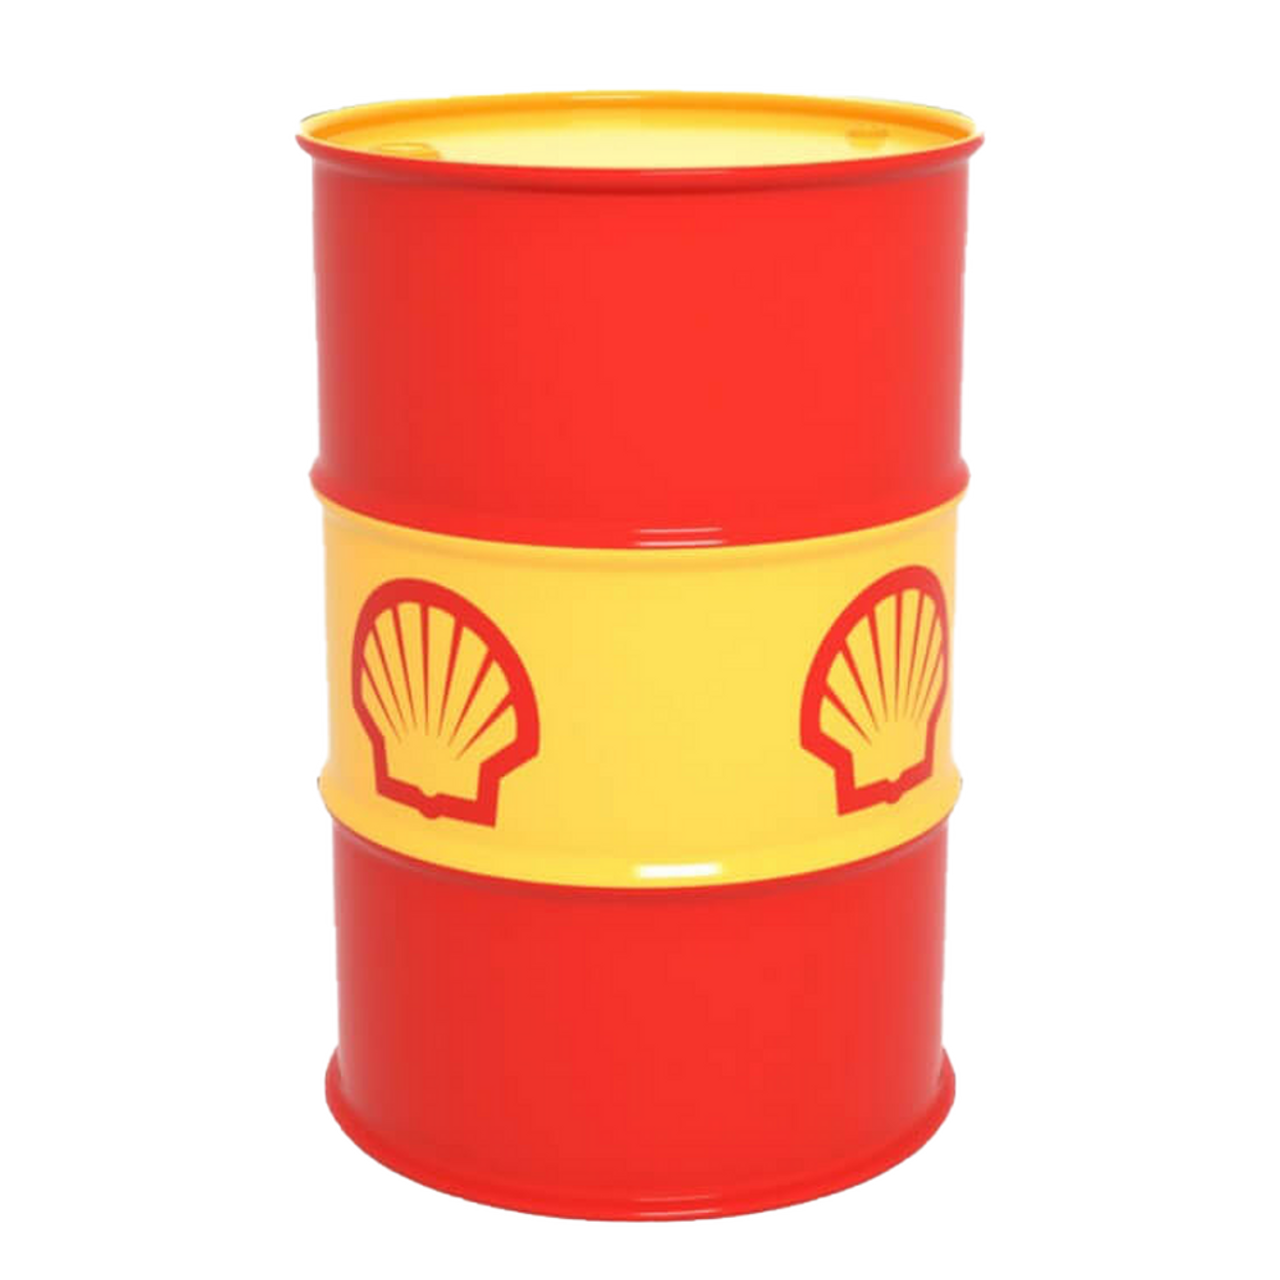 Shell Helix Ultra AVL 5W30 Motoröl, 5L,  price tracker / tracking,   Preisverlaufsdiagramme,  Preisbeobachtung,  price drop  alerts